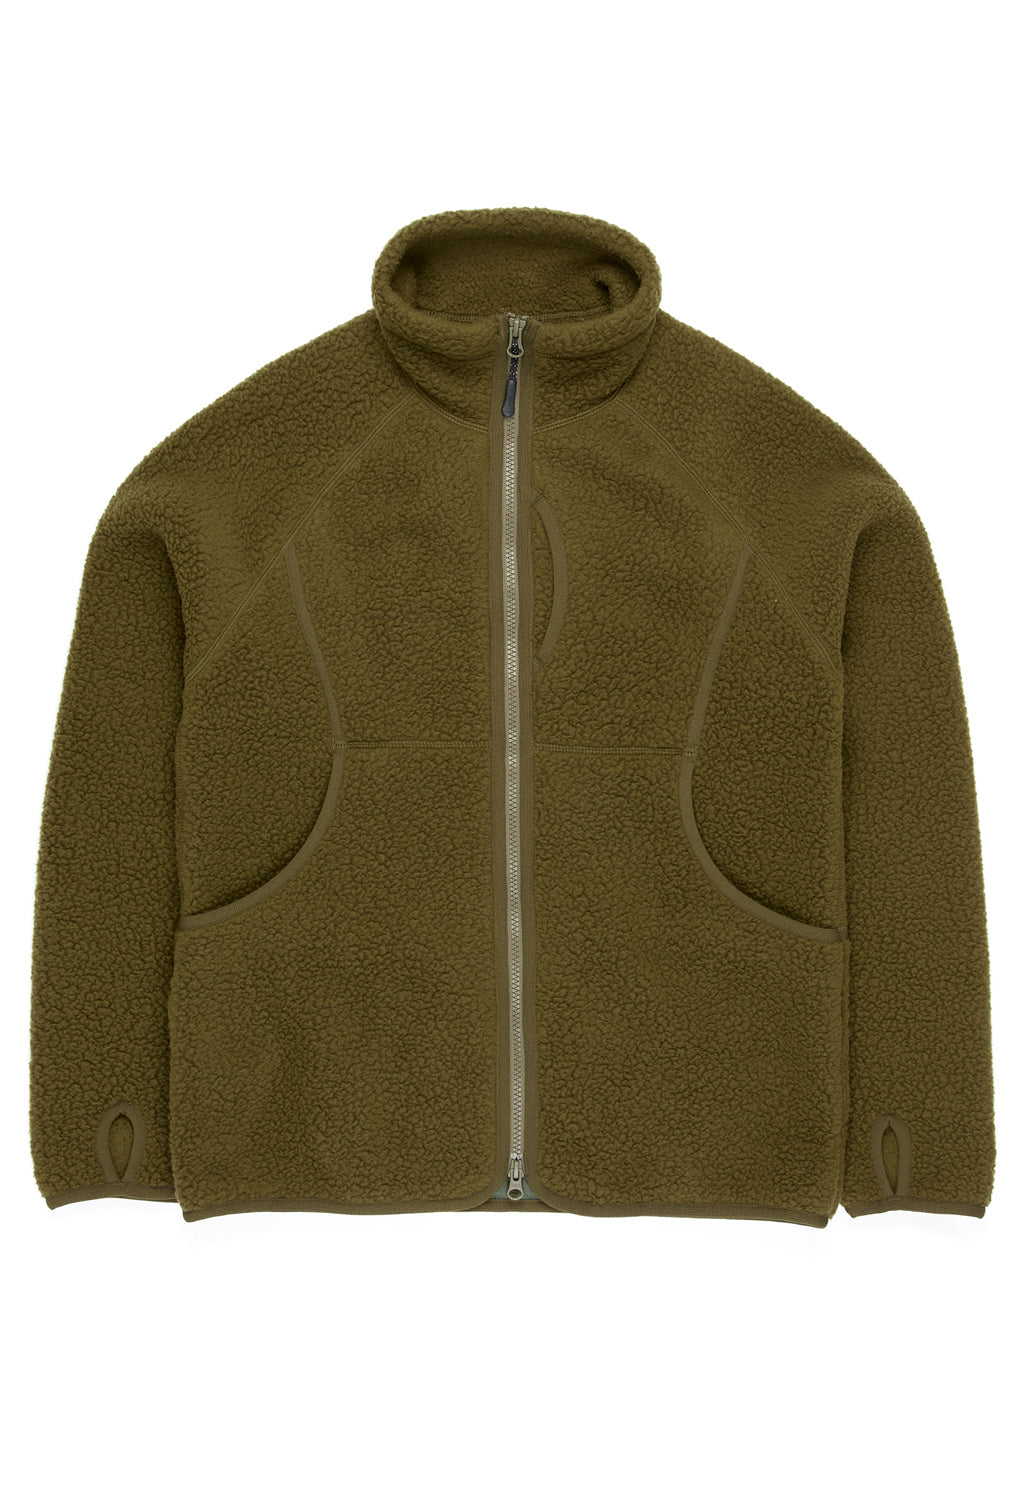 Snow Peak Men's Thermal Boa Fleece Jacket - Olive – Outsiders Store UK